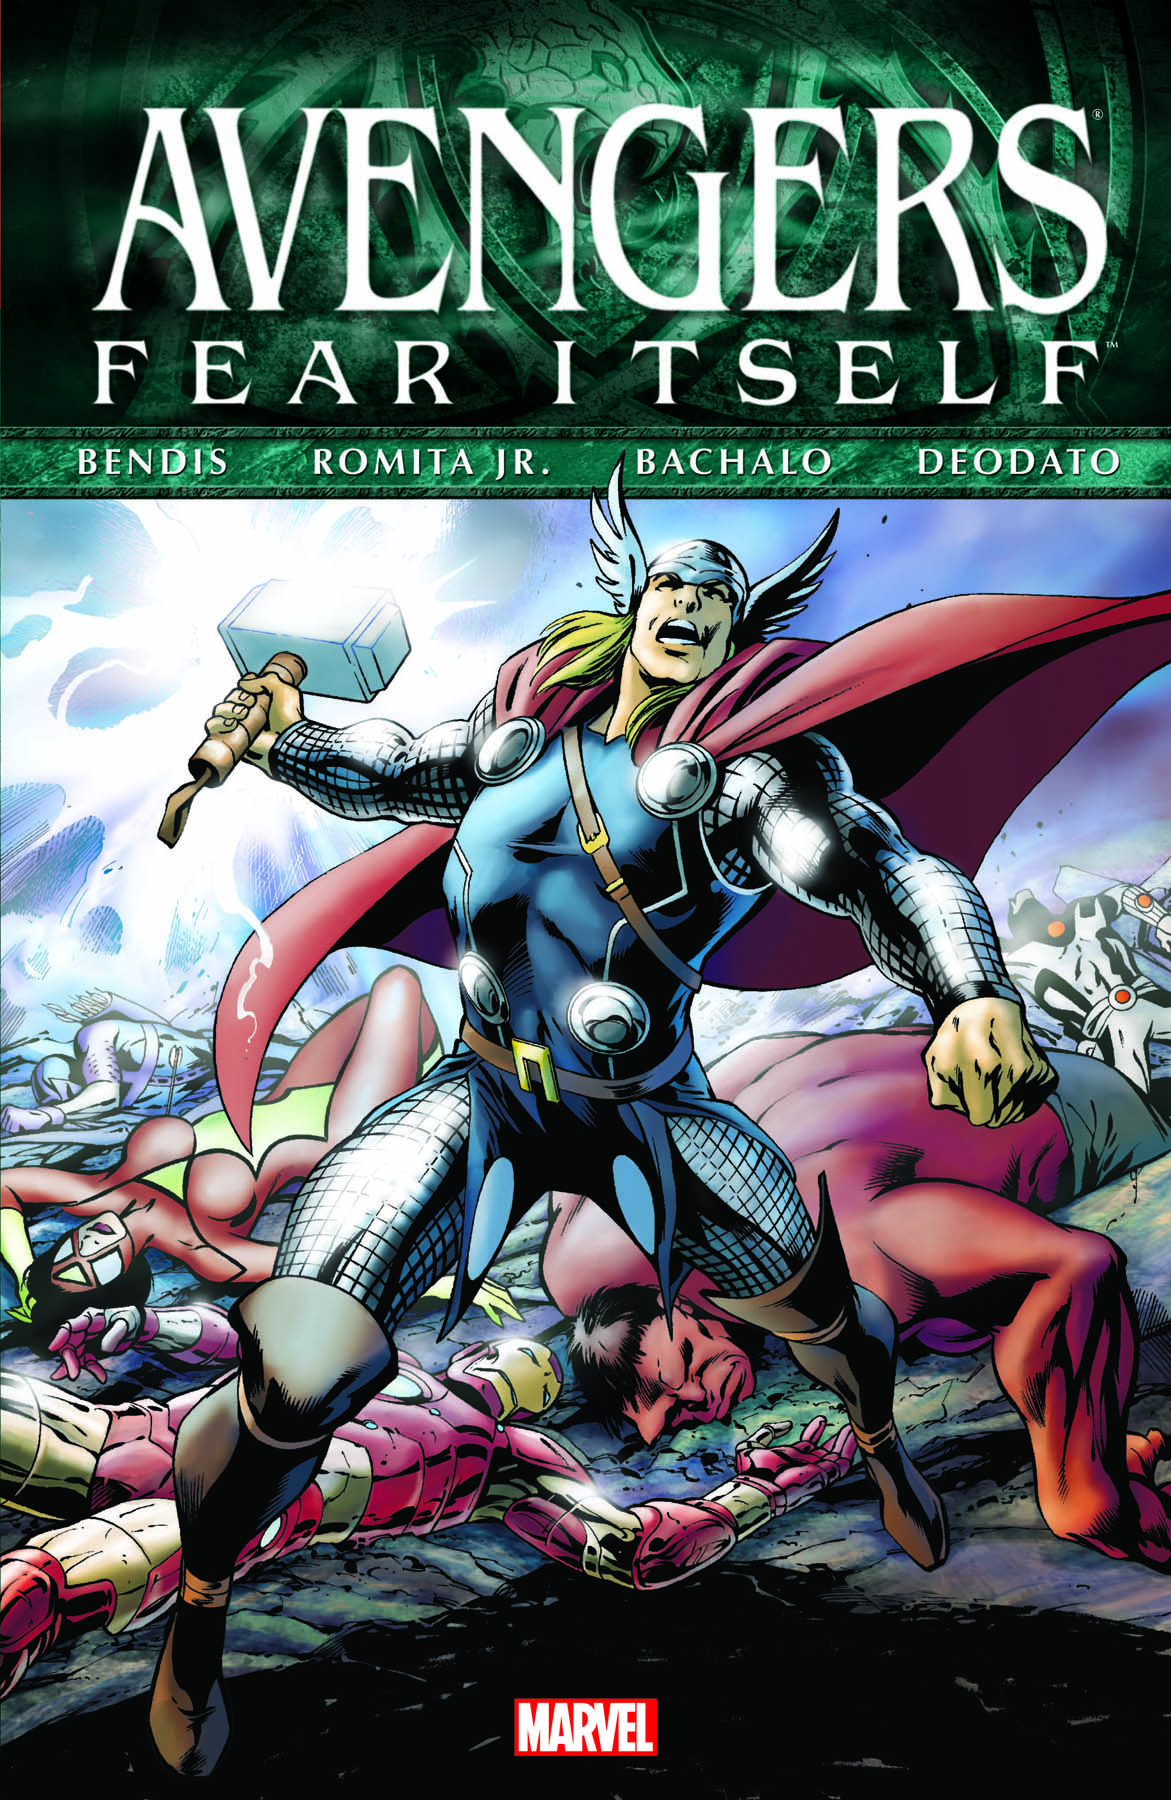 Fear Itself: Avengers (Trade Paperback)